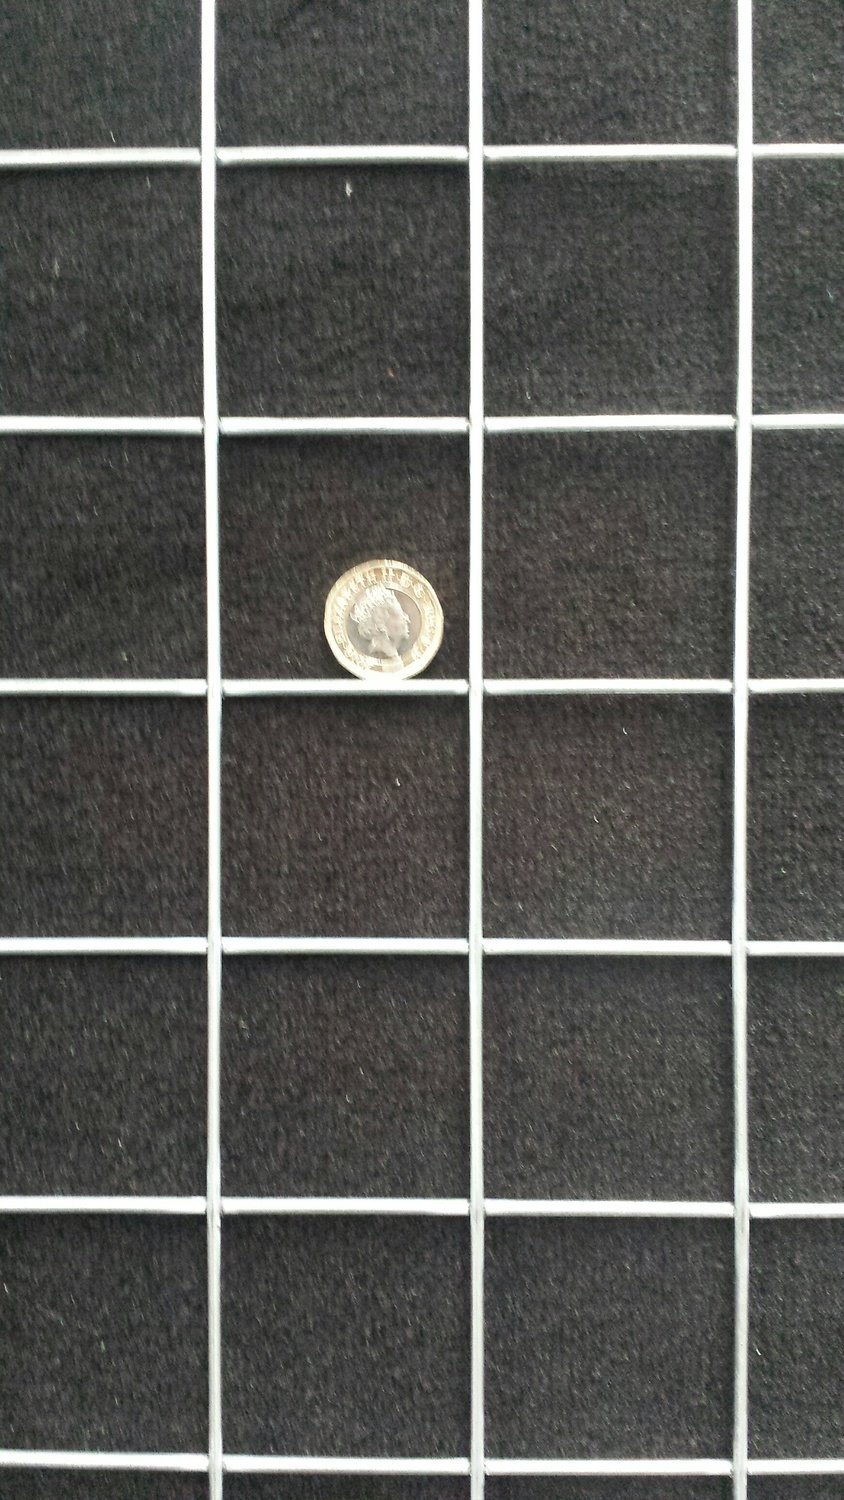 2" x 2" x 12swg (2.50mm) Galvanised 6' x 3' (183cm x 91.5cm) Flat Welded Mesh Panels